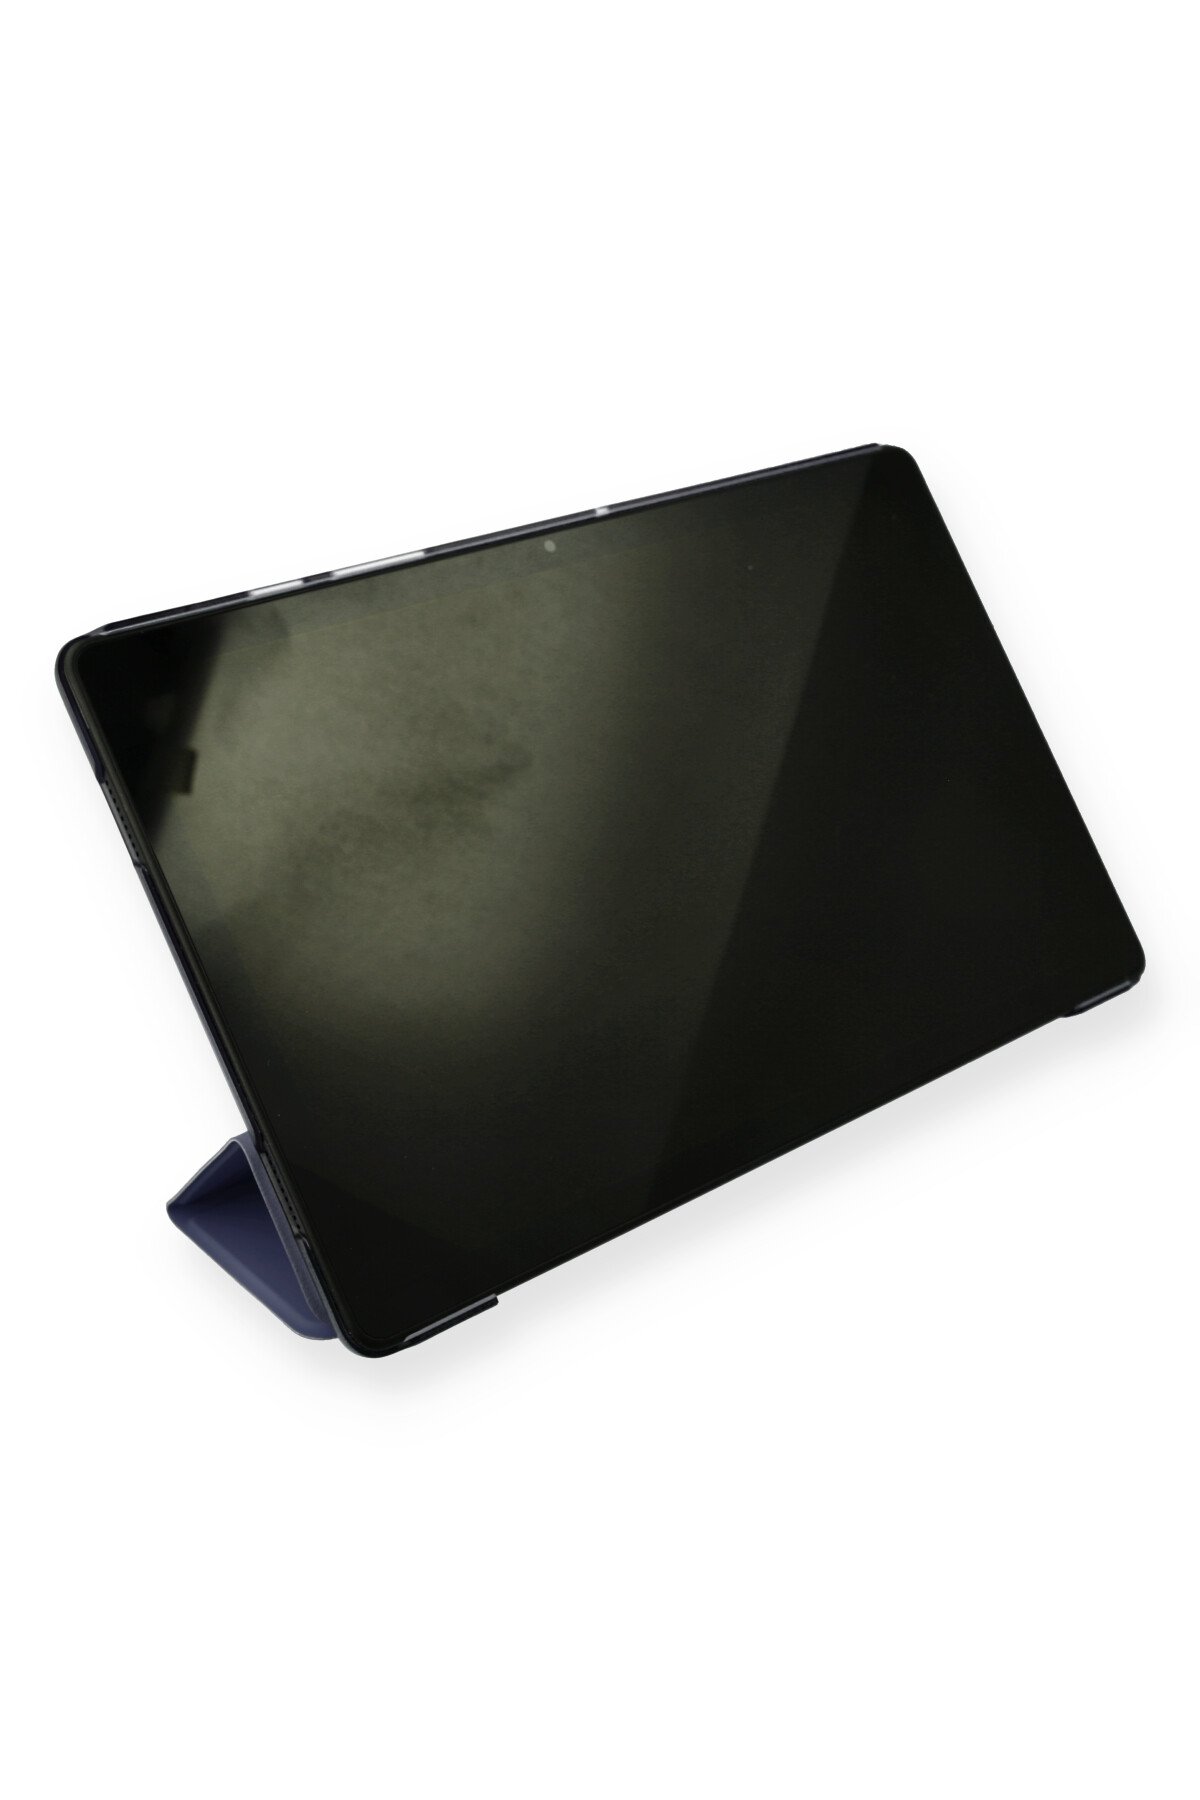 Newface iPad Air 3 10.5 Kılıf Starling 360 Kalemlikli Tablet Kılıf - Koyu Yeşil